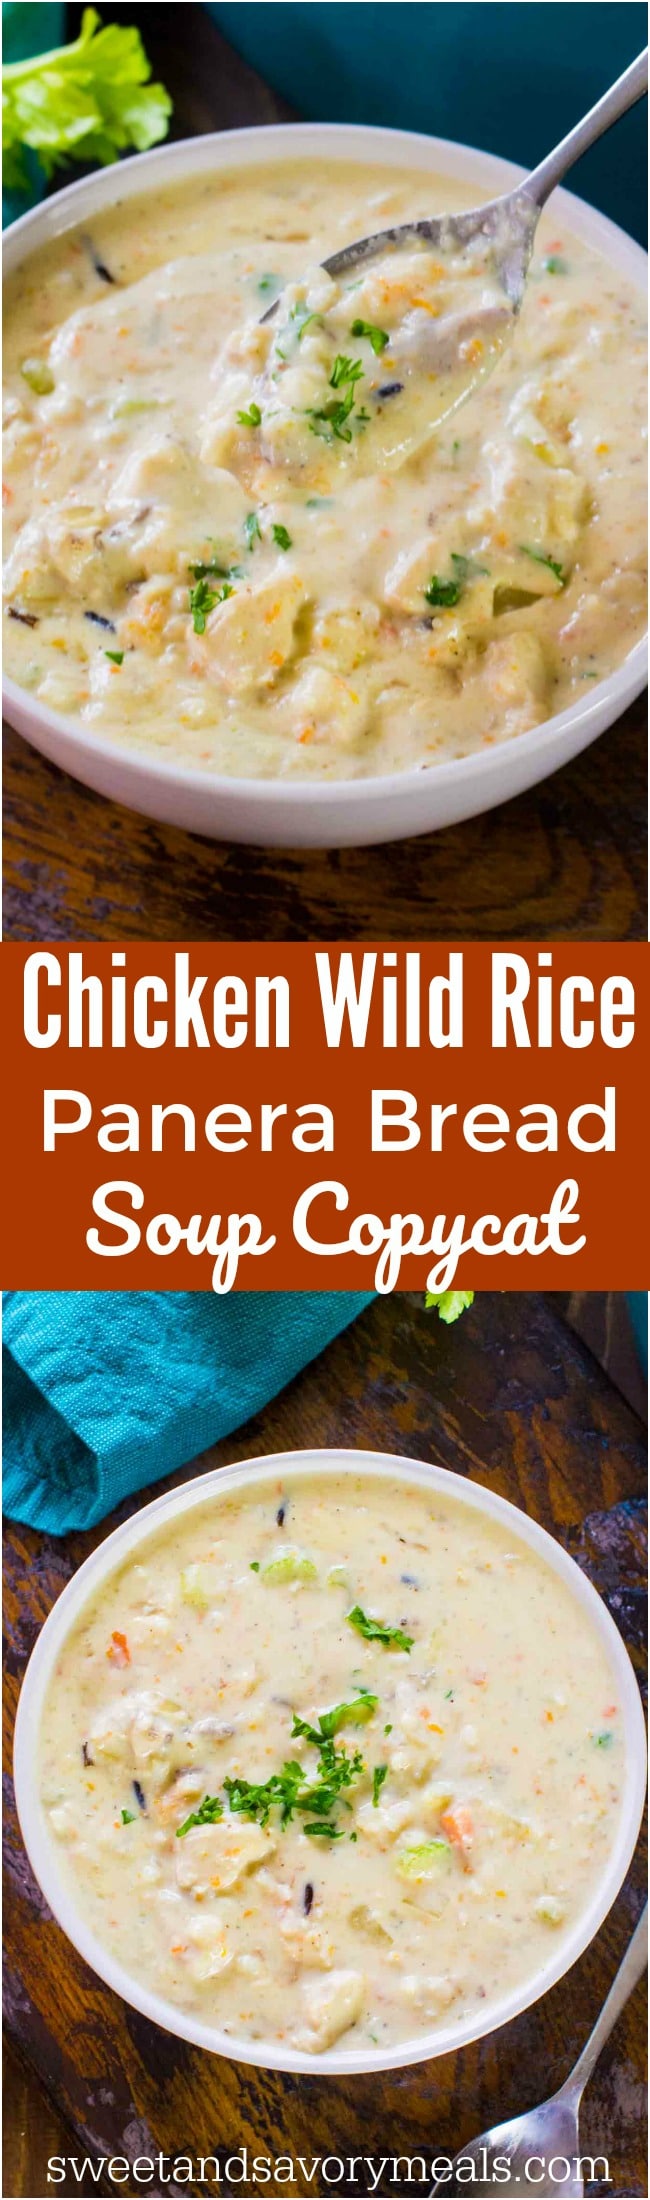 Panera Bread Chicken Wild Rice Soup - Copycat - Sweet and ...